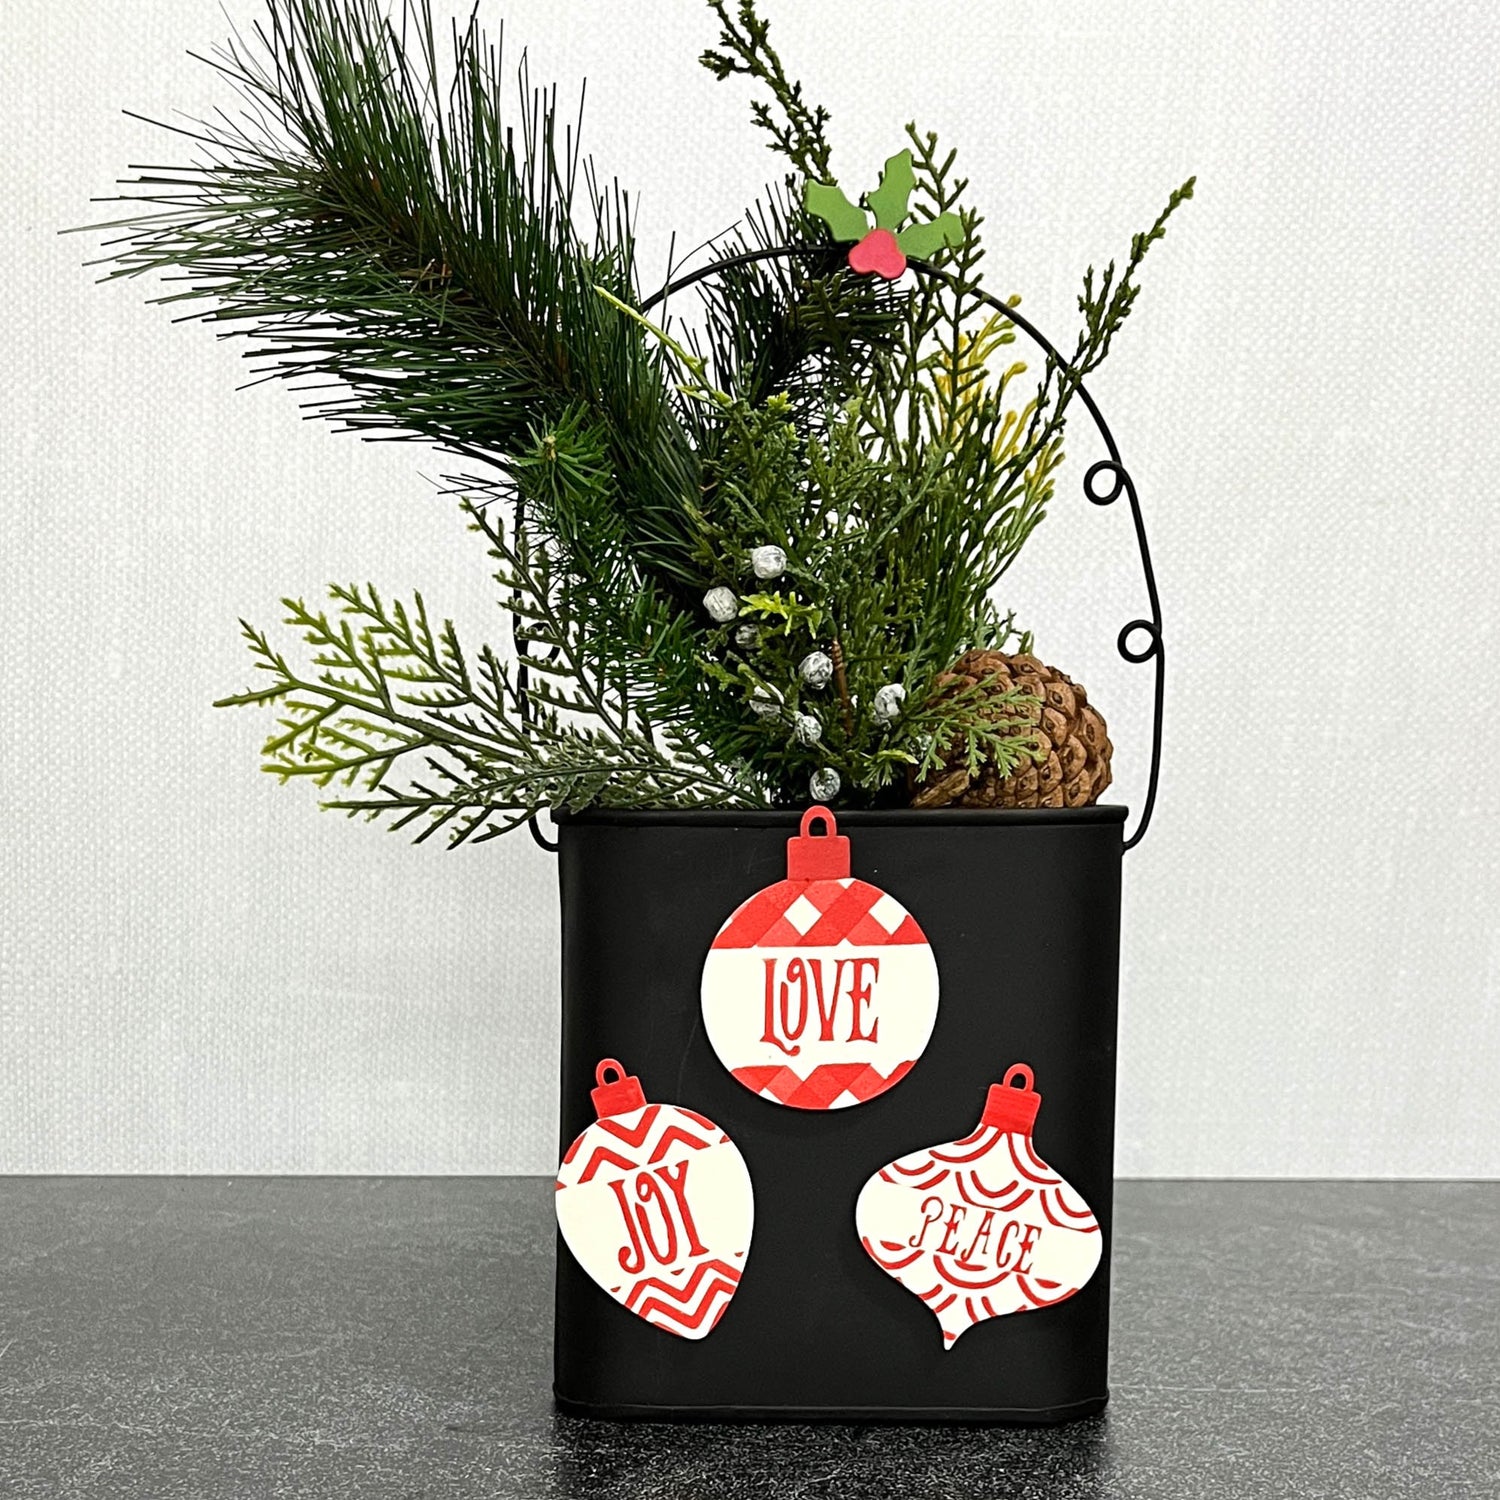 Christmas Ornament Magnetic Art Pop Minis, S/3